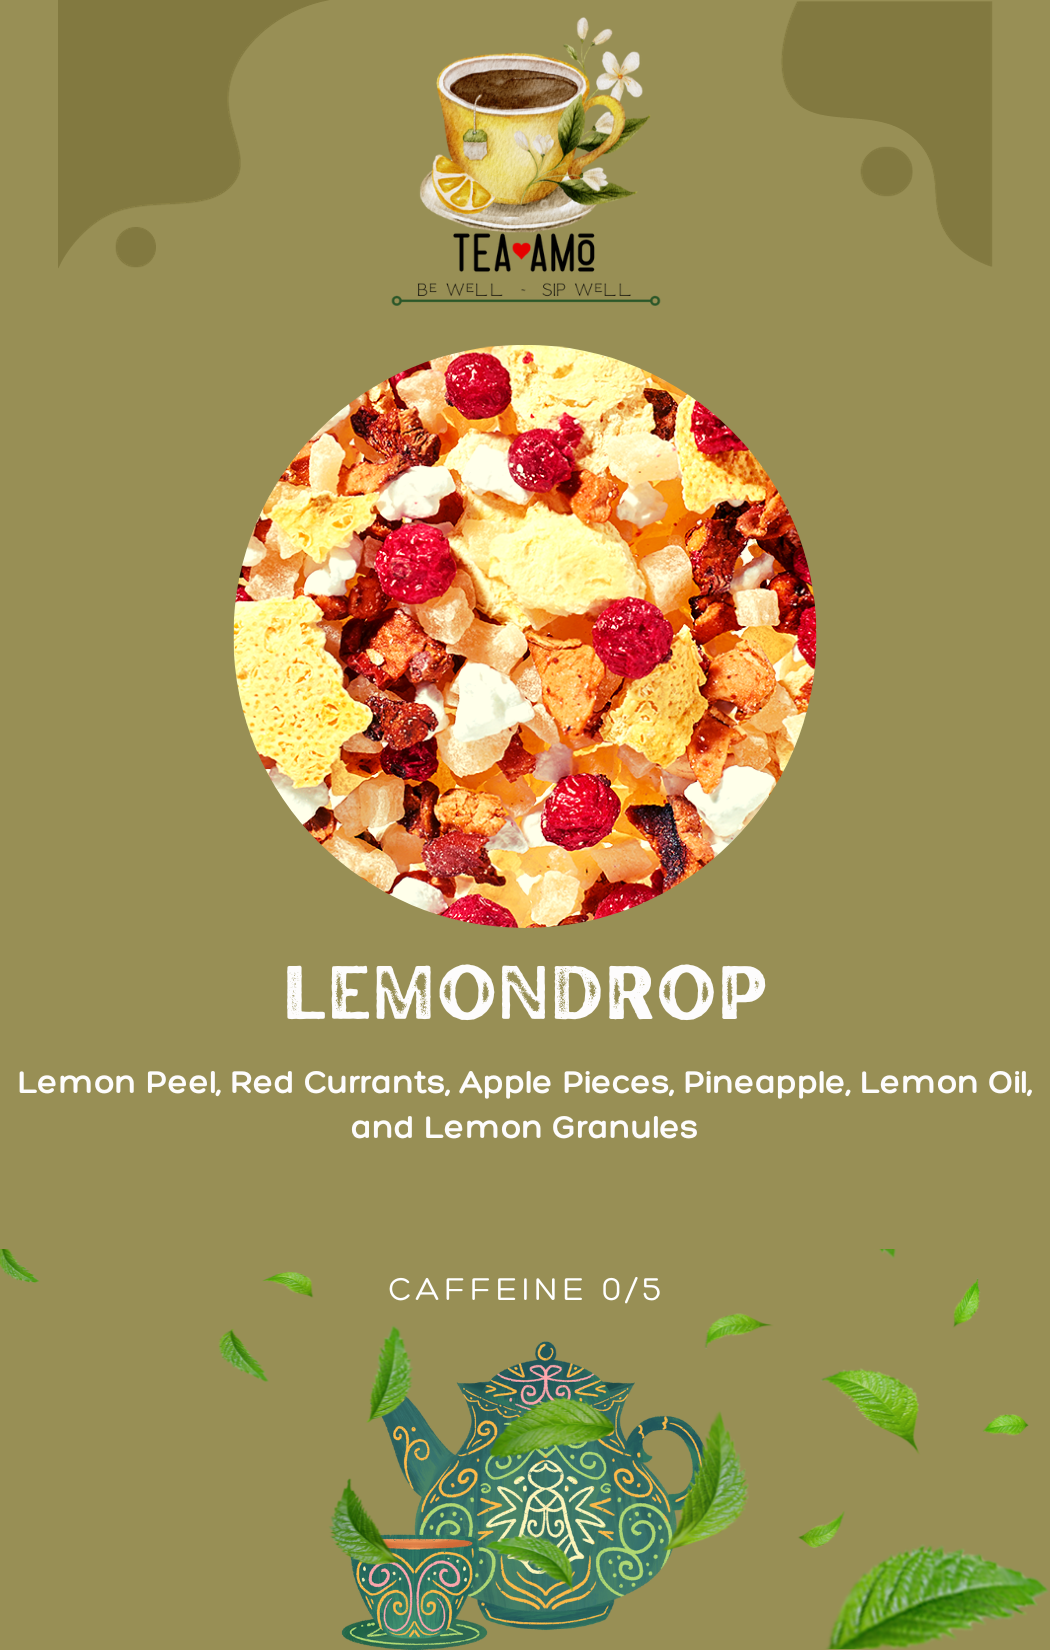 Tea Amo Wellness: Lemondrop Tea